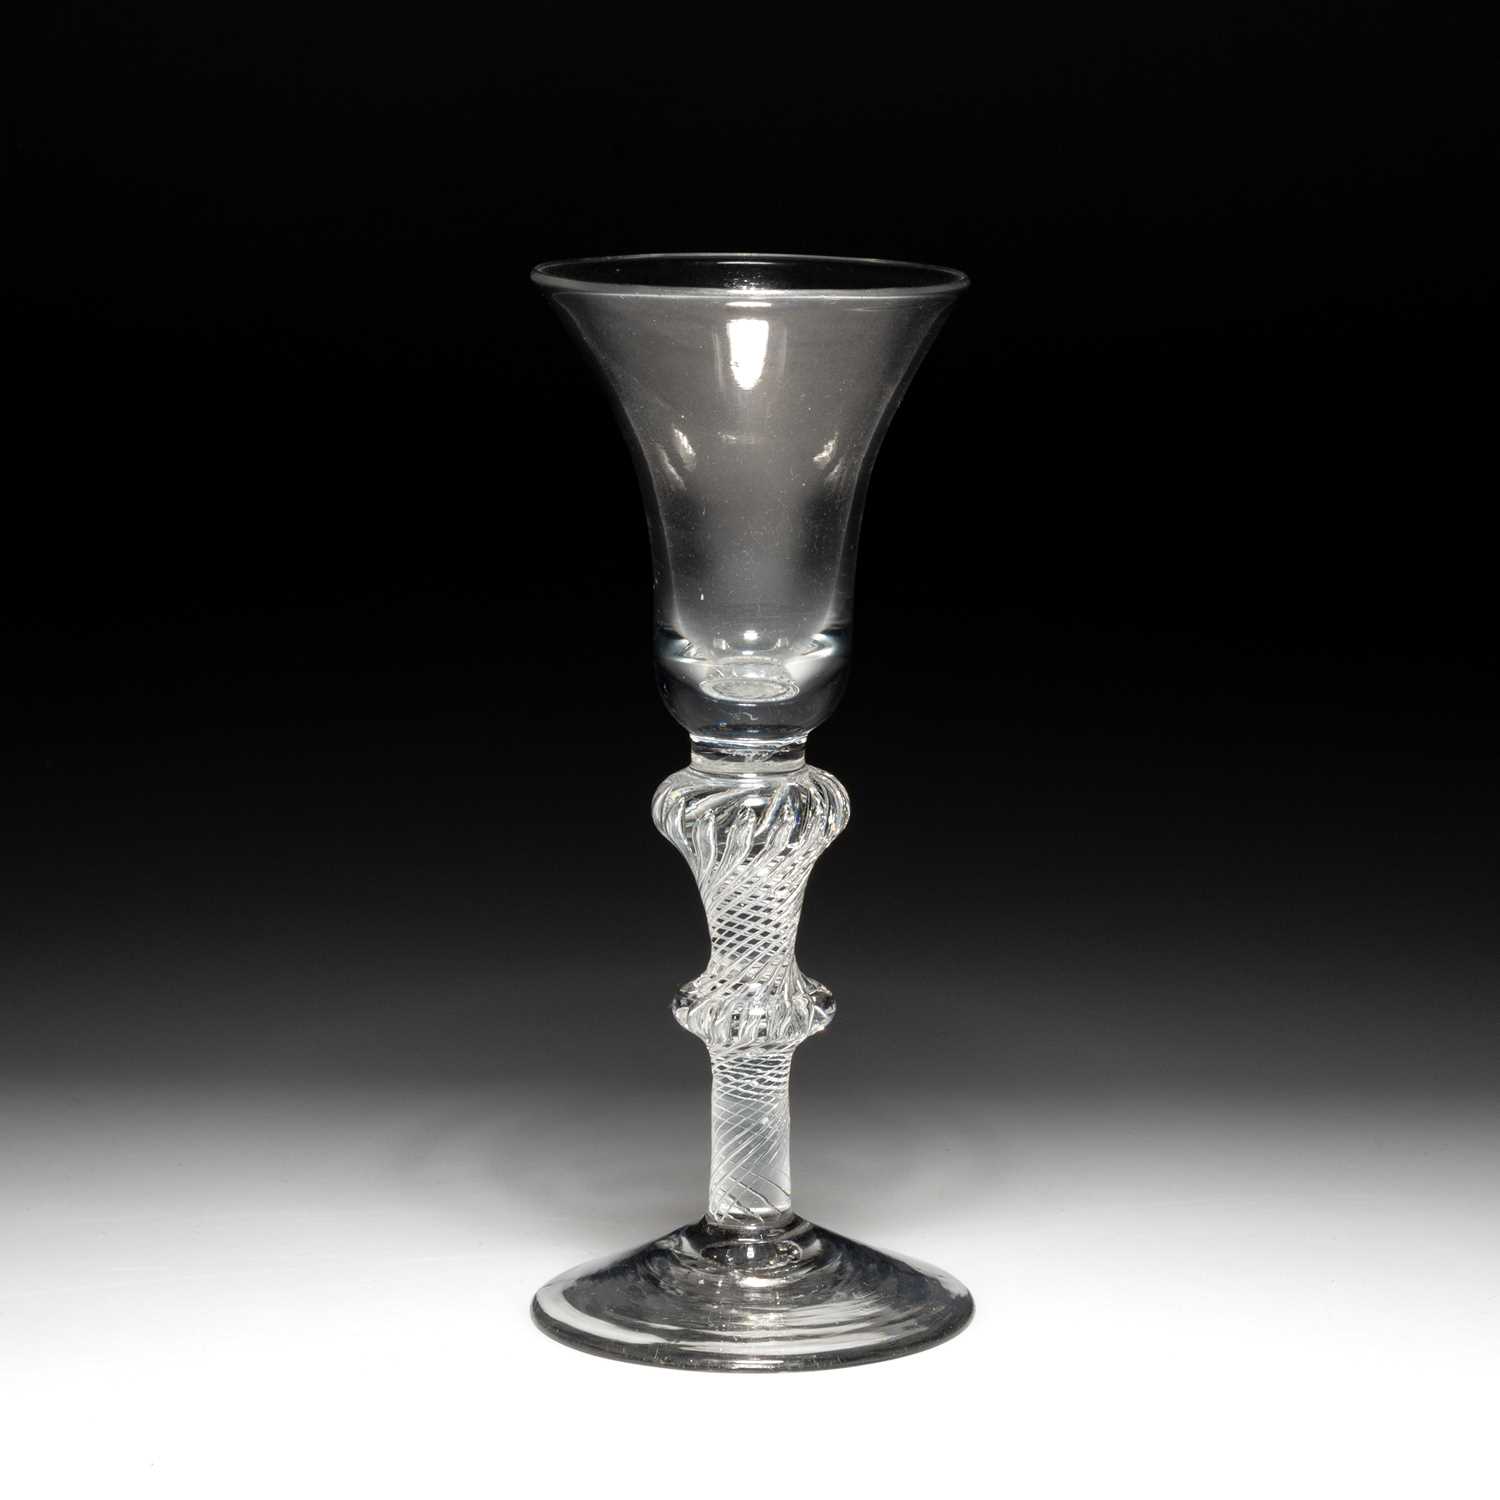 AN 18TH CENTURY AIR-TWIST WINE GLASS